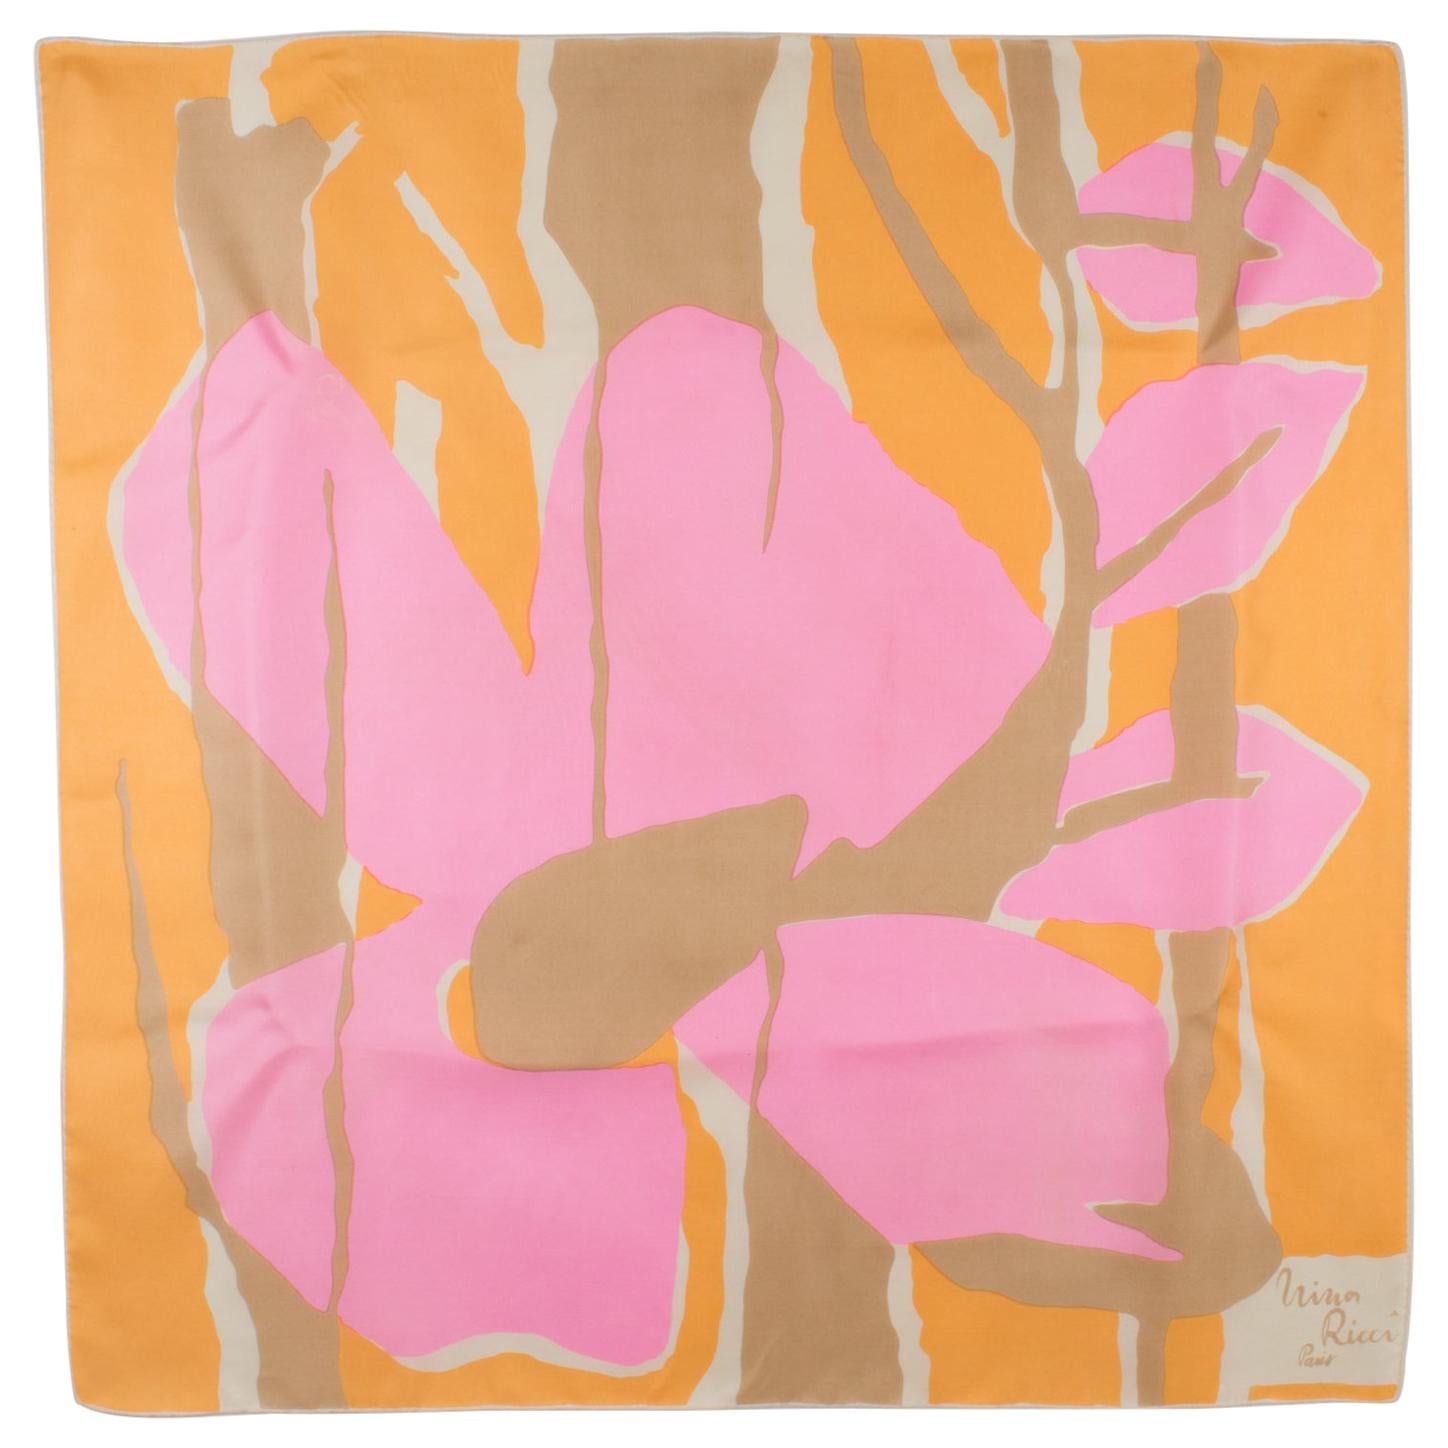 Nina Ricci Paris Silk Scarf Abstract 1970s Print in Pink and Orange